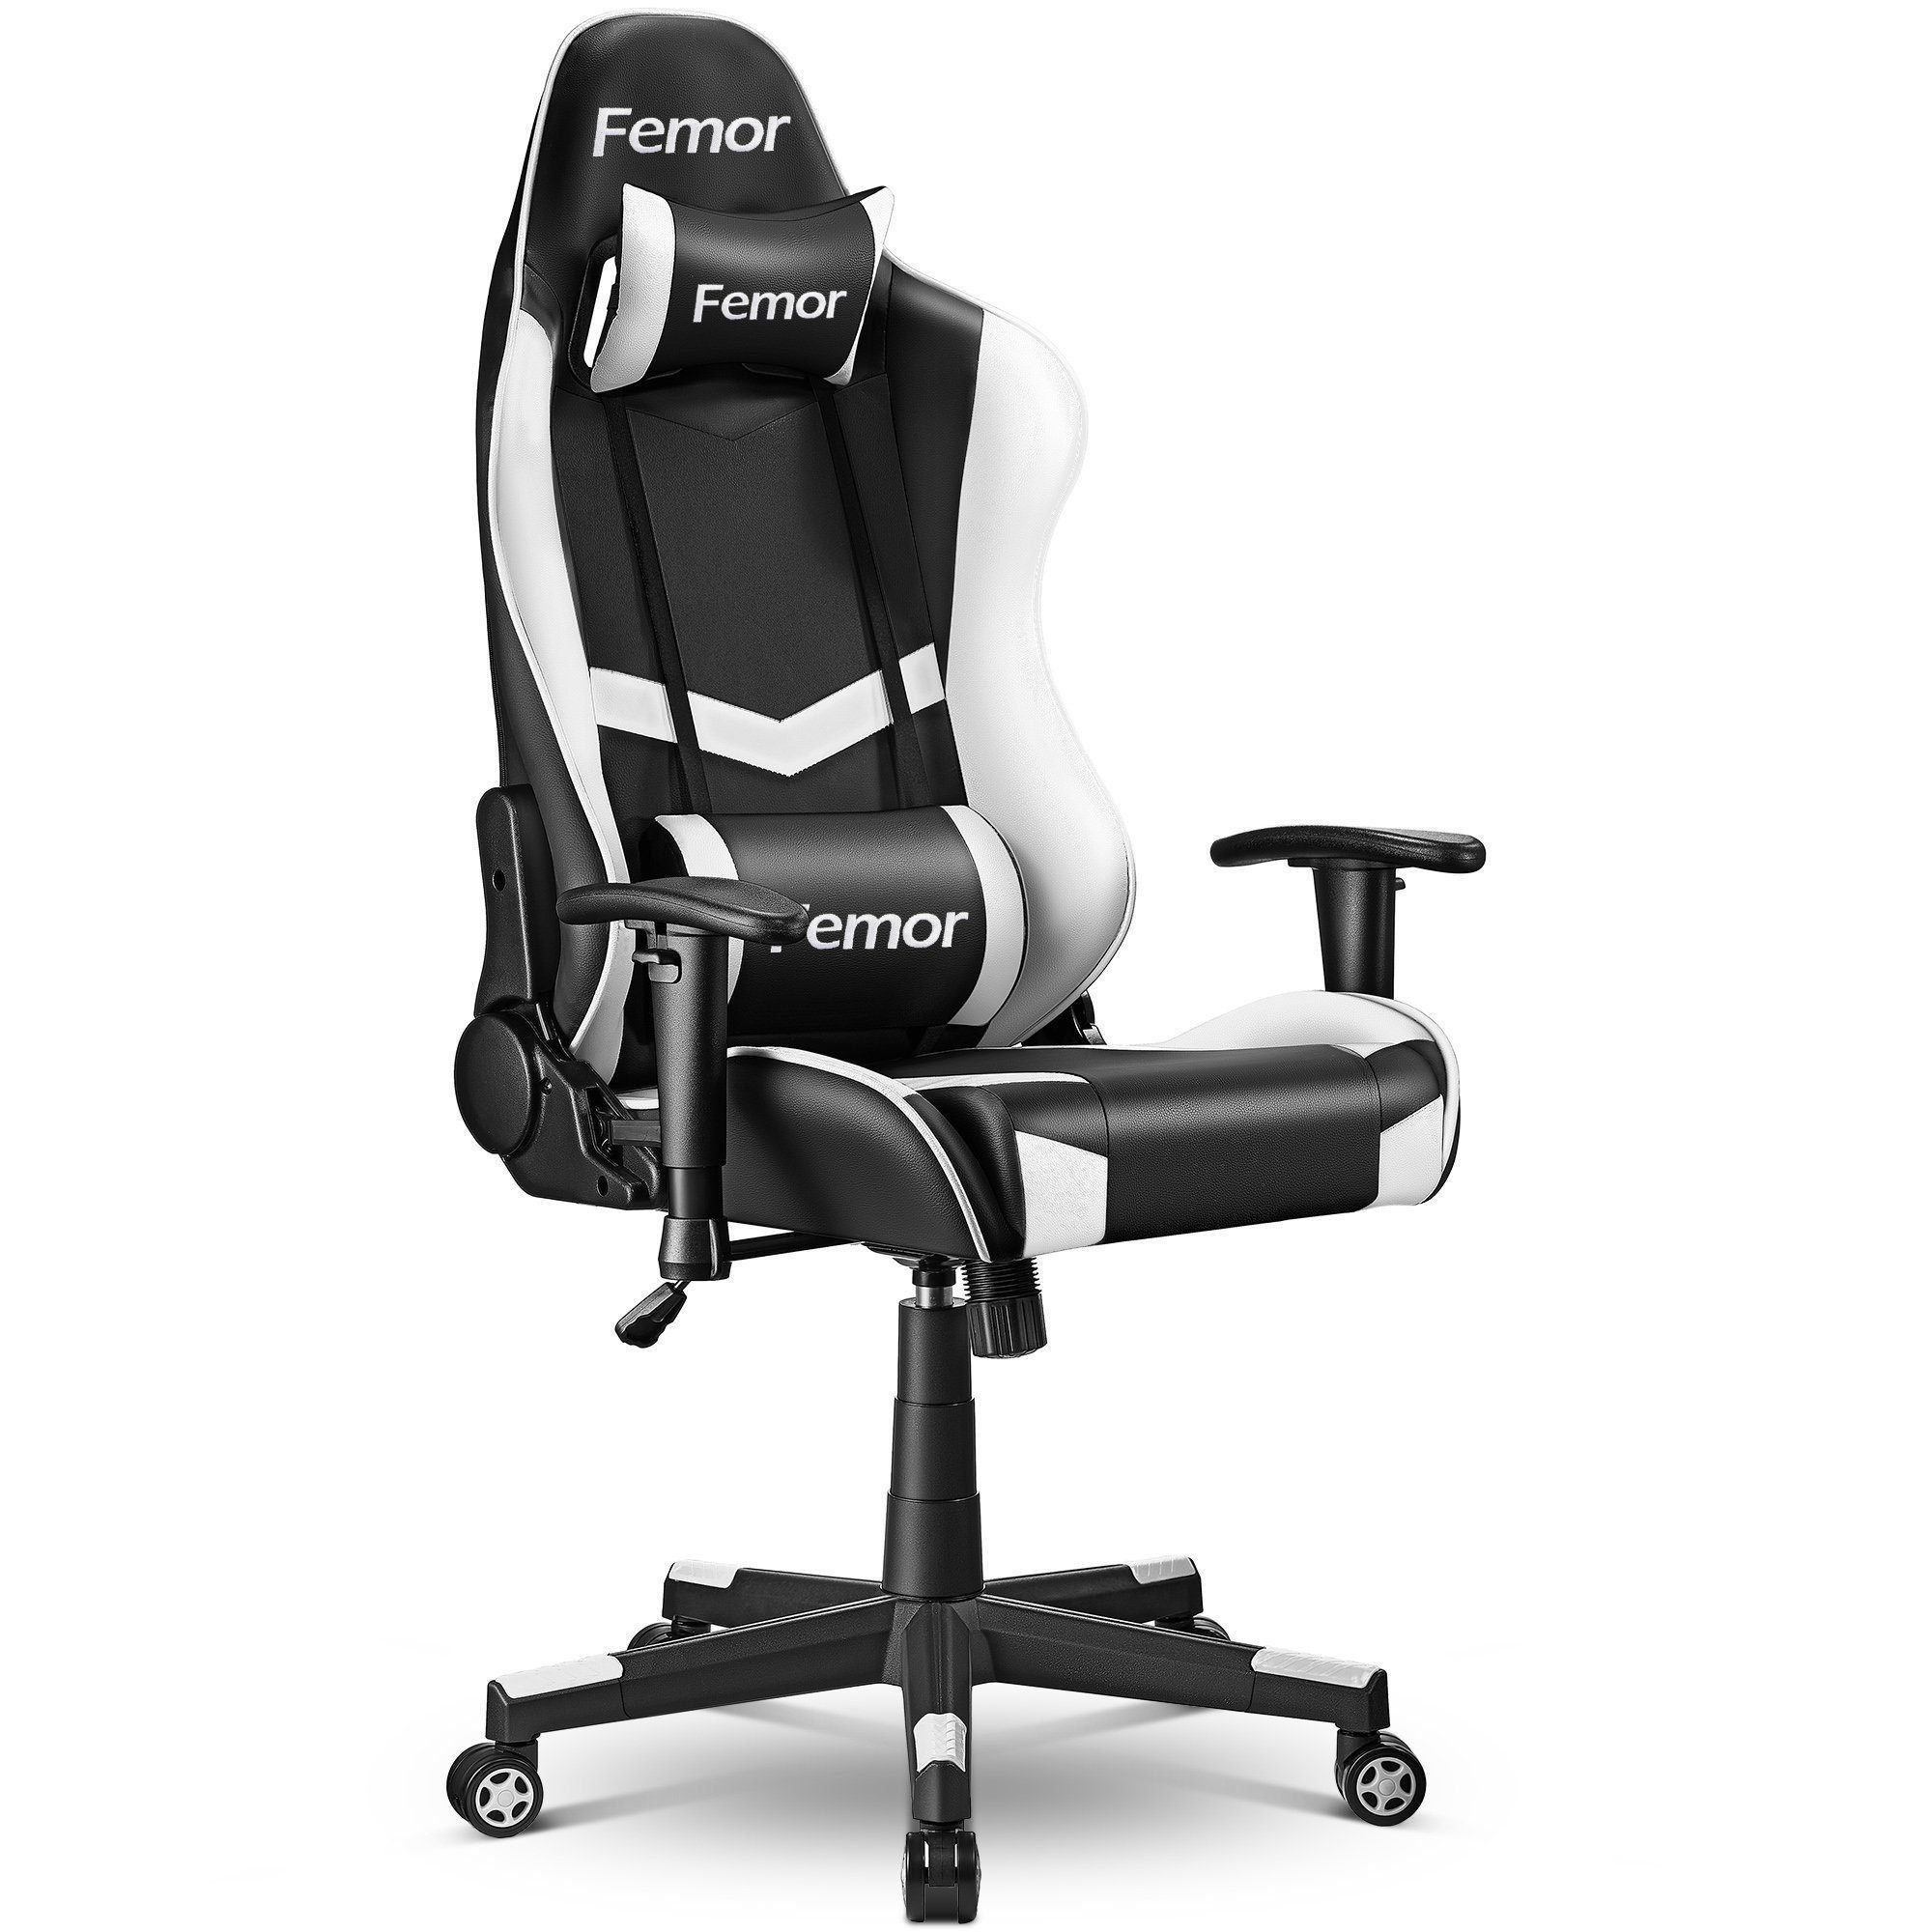 Femor Gaming Chair Gaming Stuhl, Gamer Stuhl 90°-160° Neigungswinkel Weiß